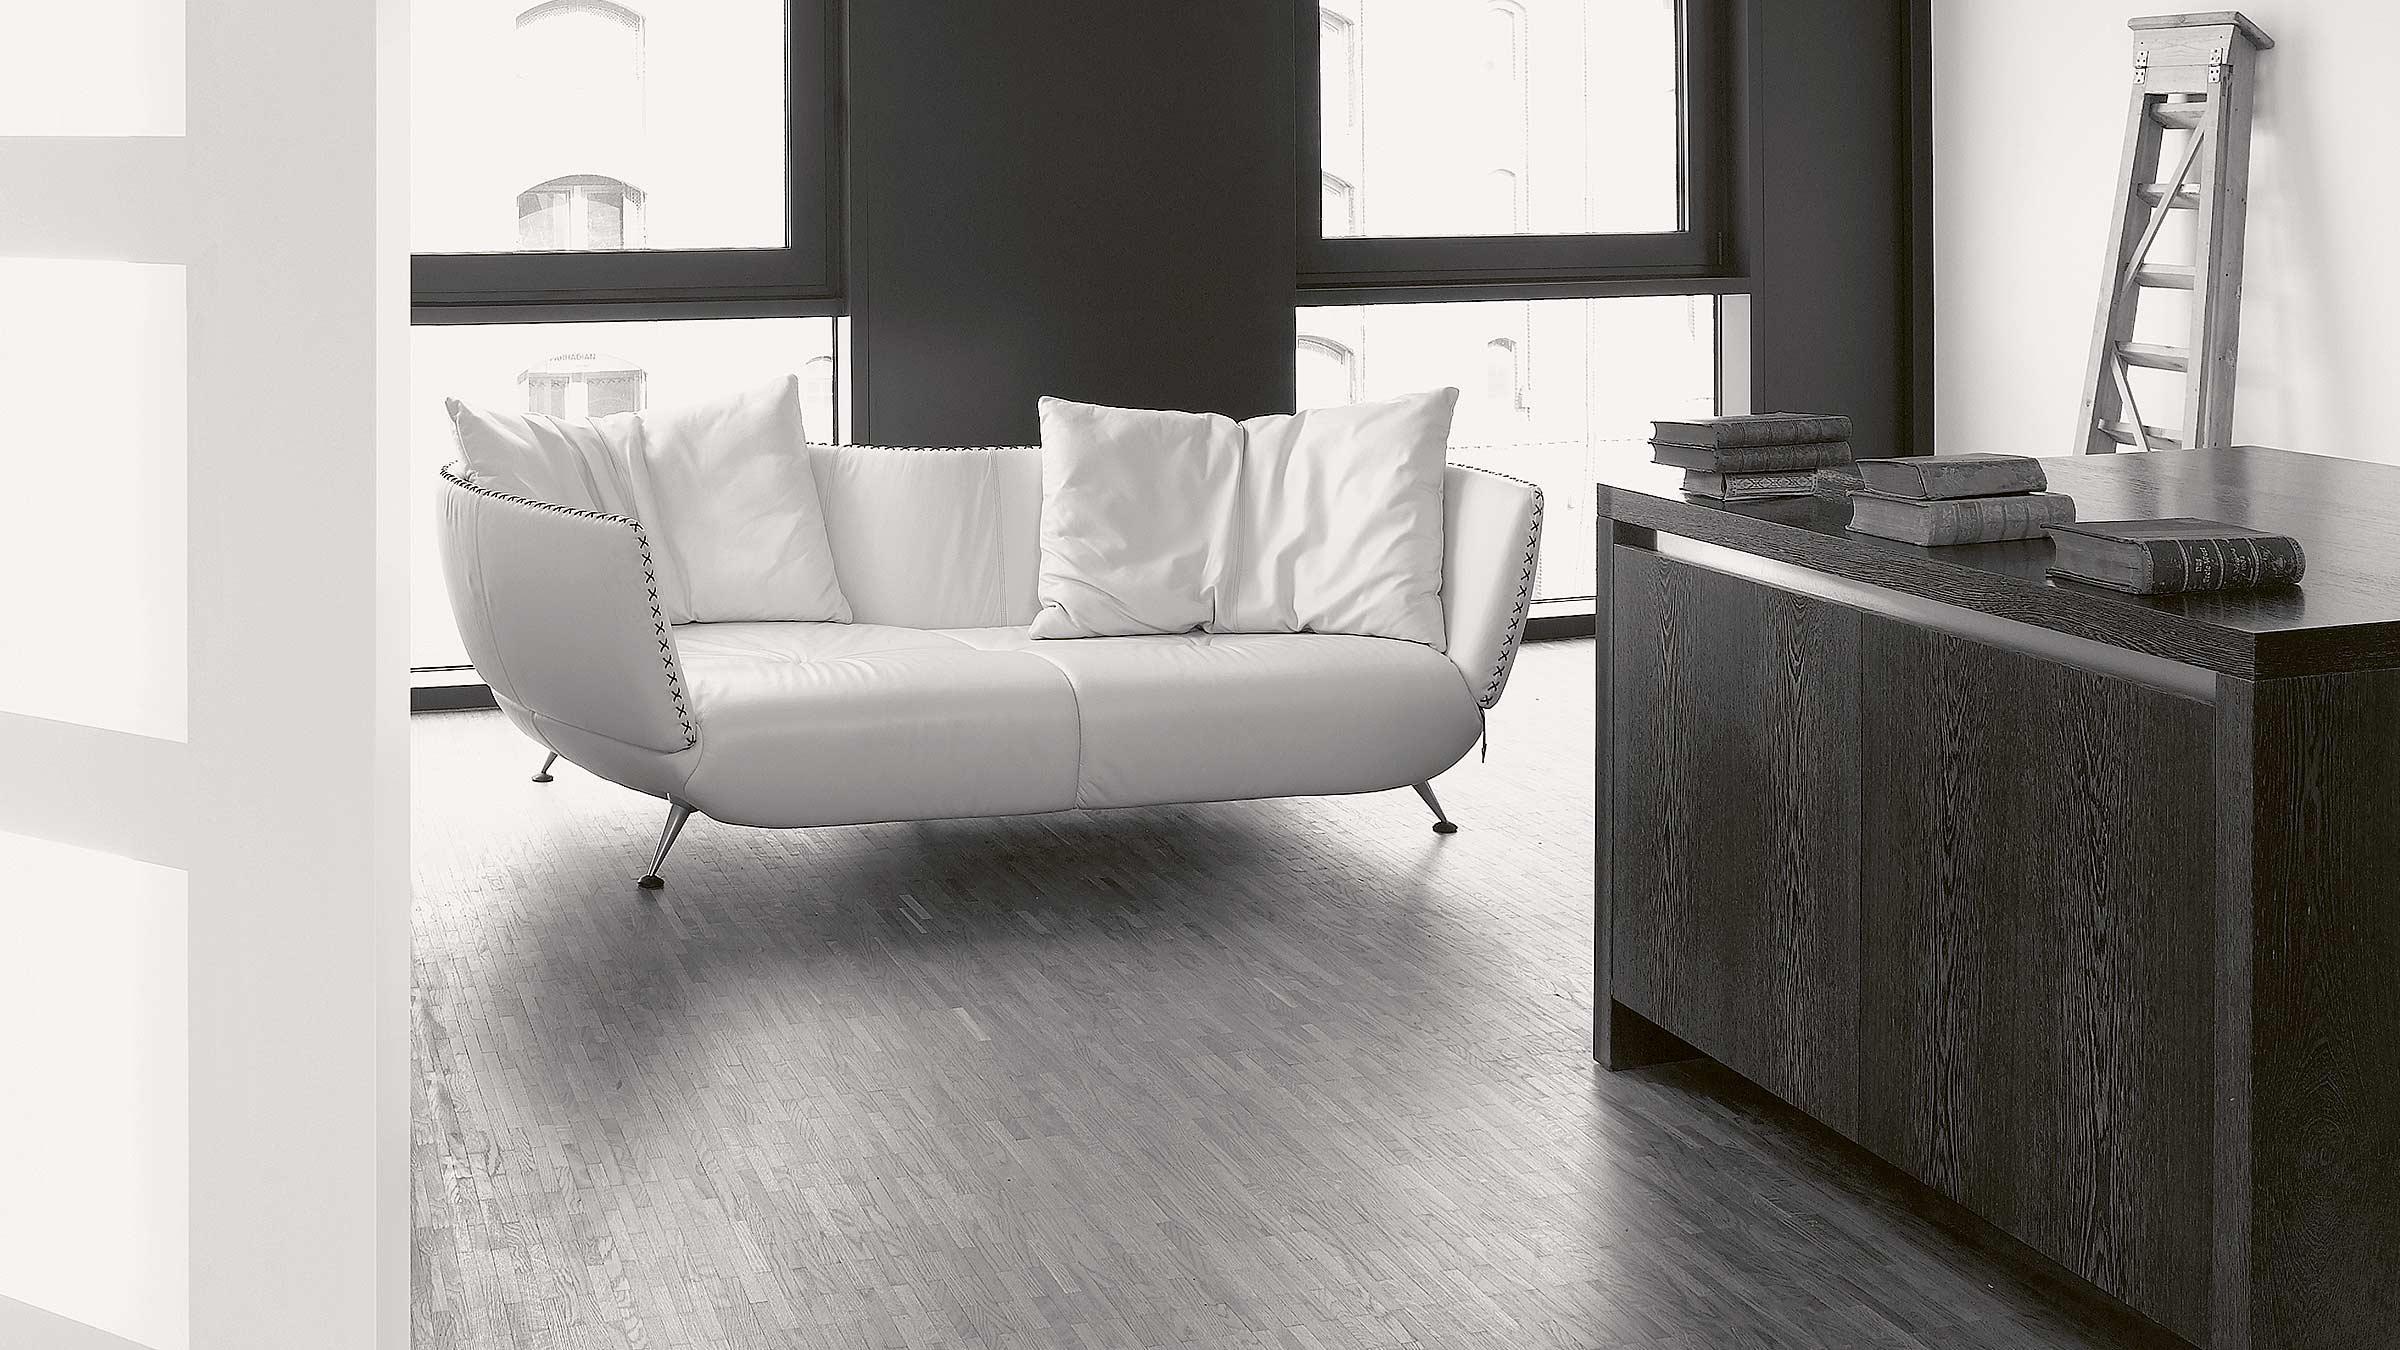 Swiss De Sede DS-102 Sofa in Espresso Upholstery by Mathias Hoffmann For Sale